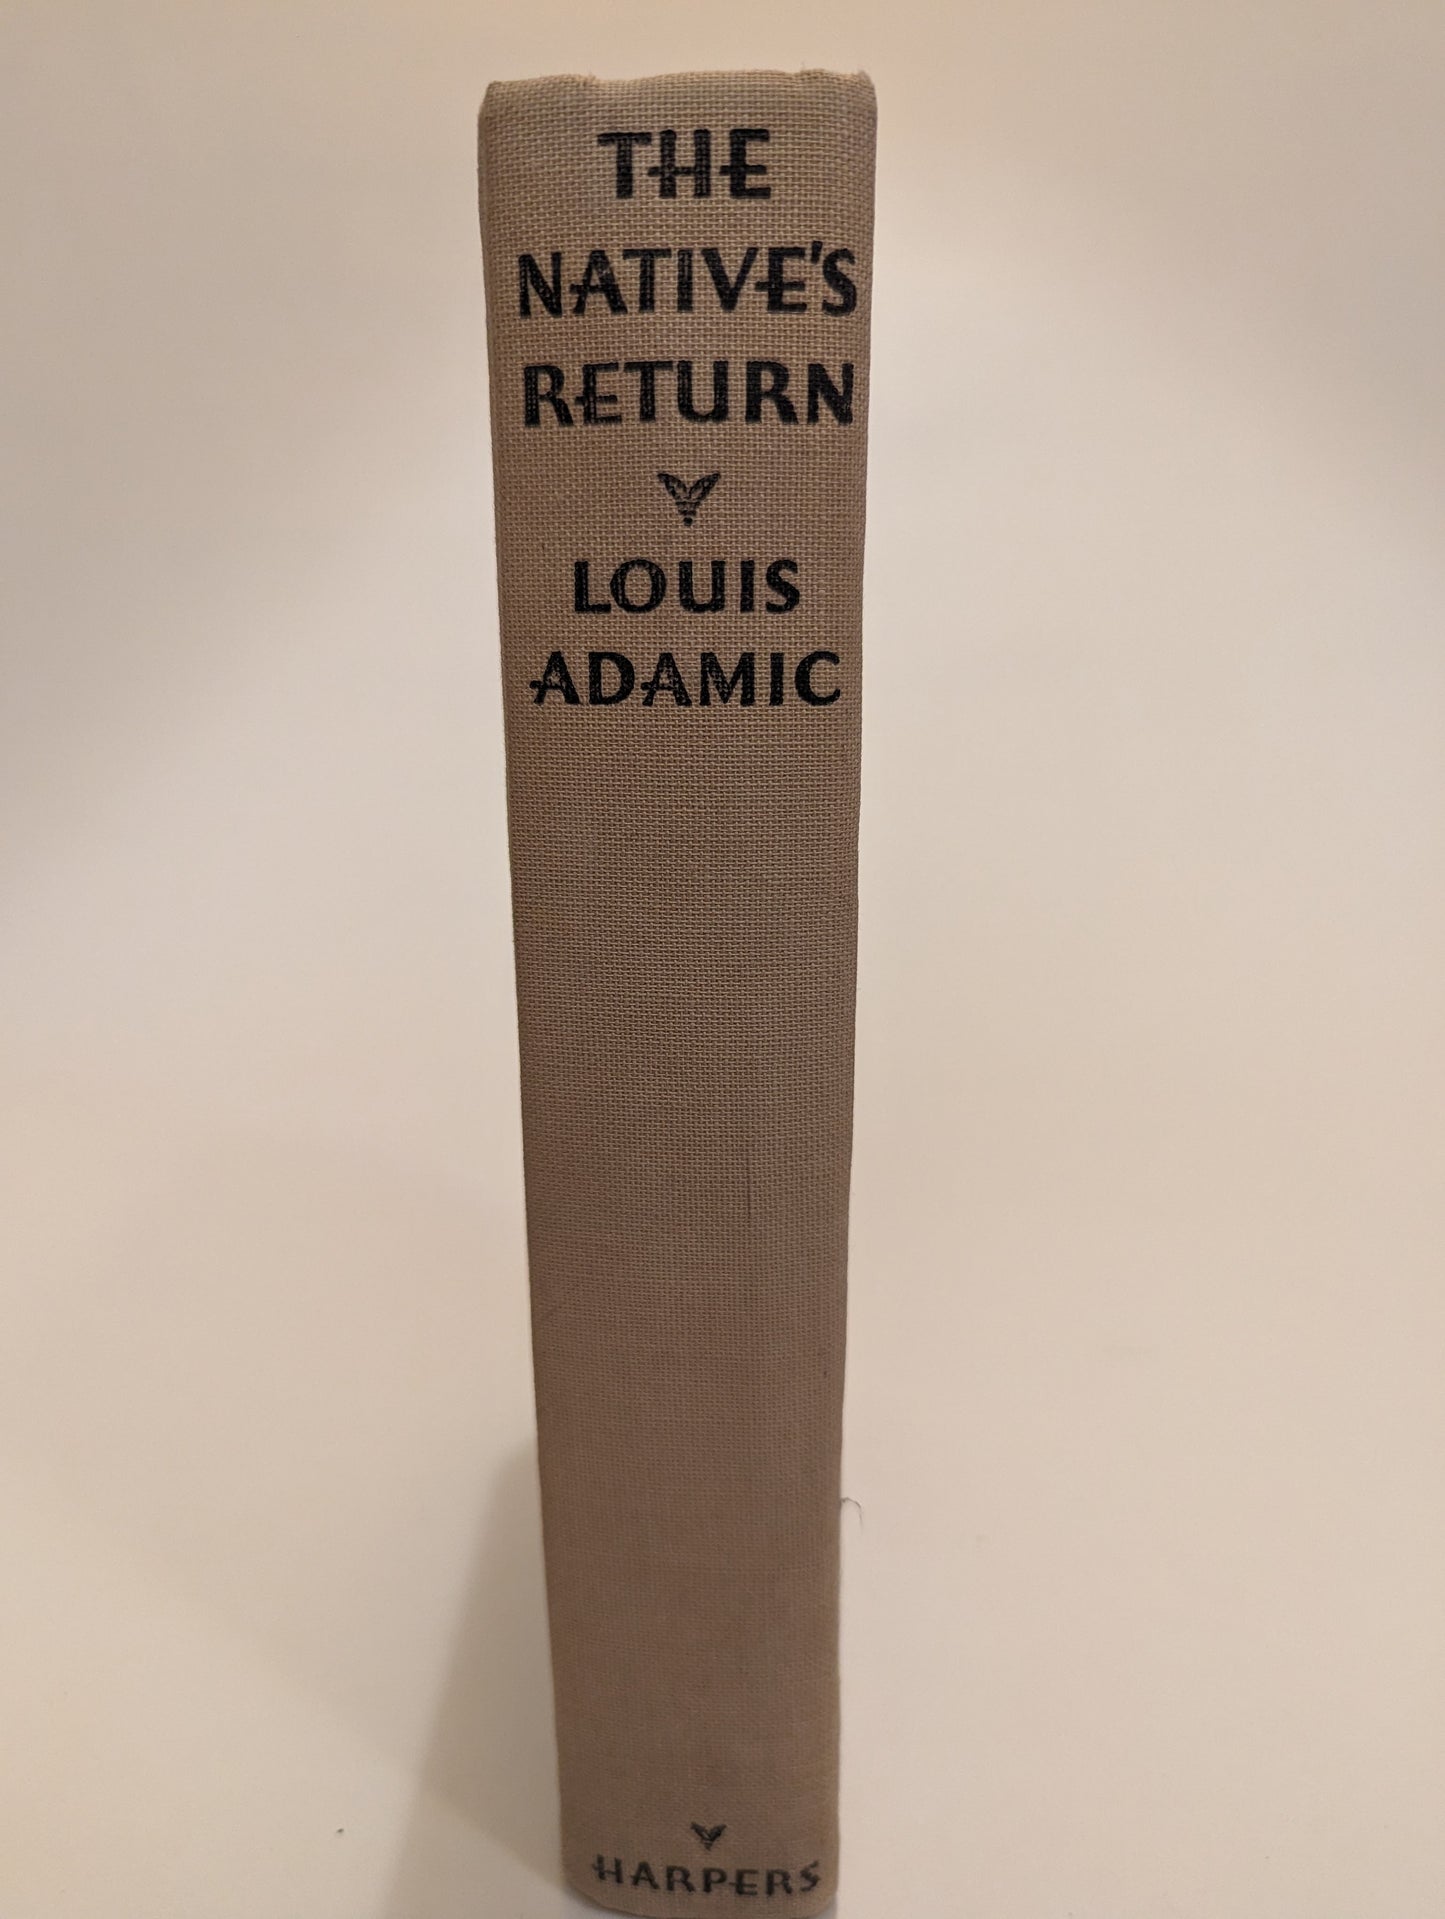 The Natives’ Return [Louis Adamic]